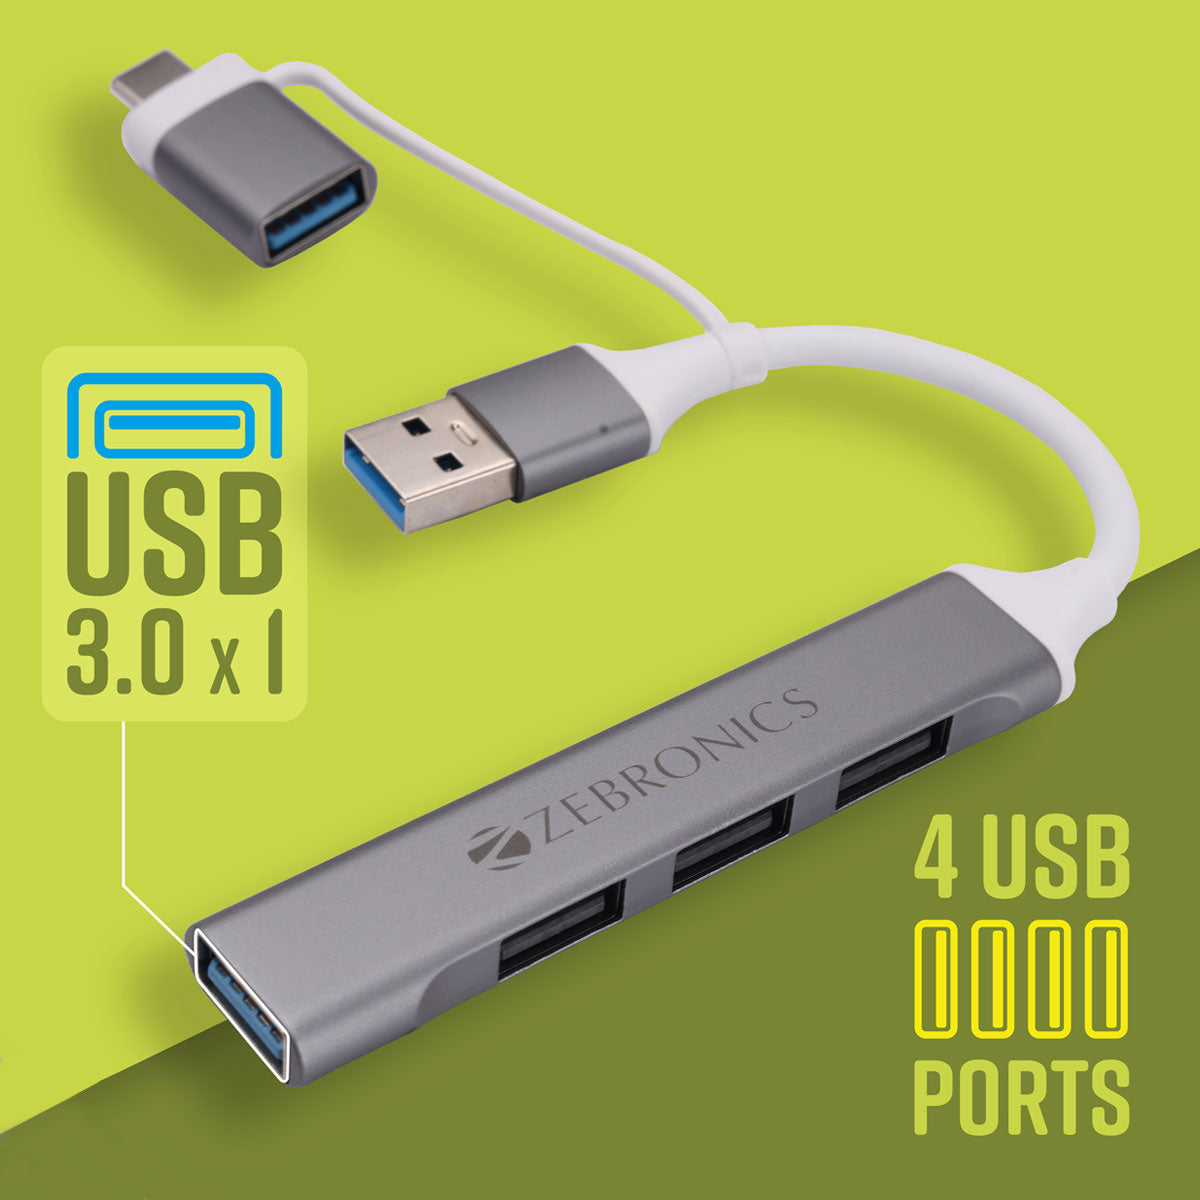 ZEB-TA200UC - USB/Type C Multiport Adapter - Zebronics